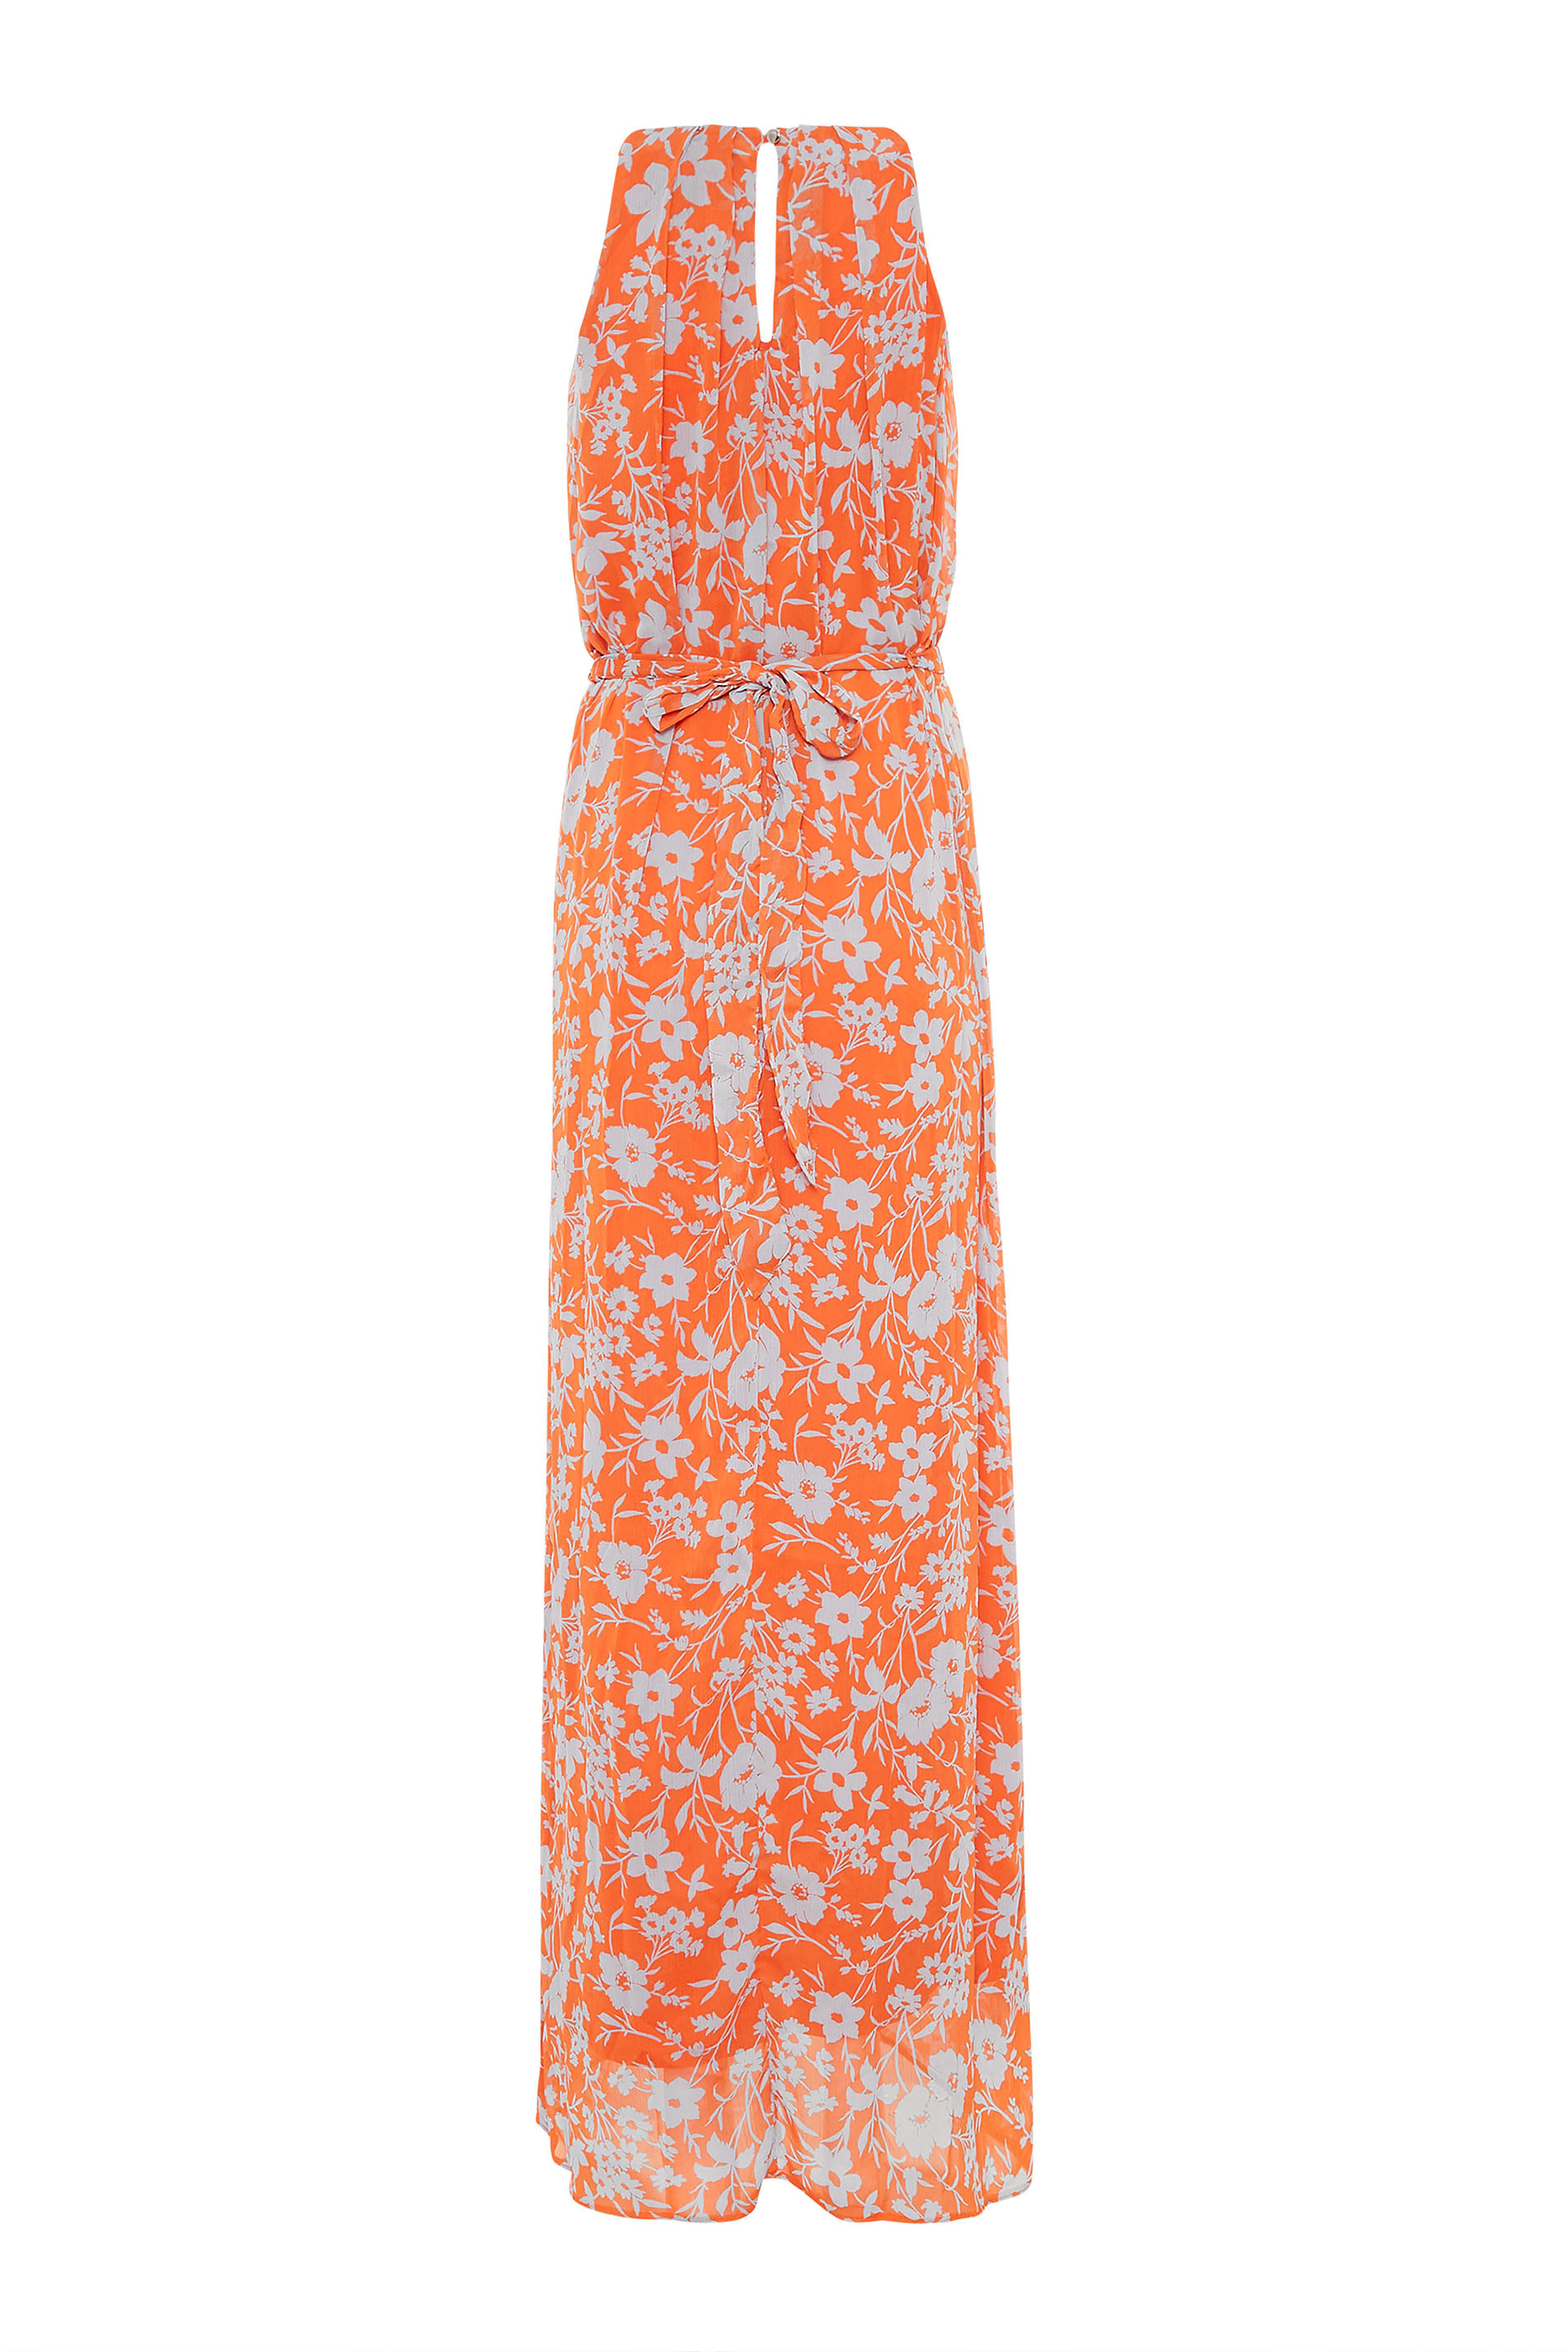 LTS Orange Floral Halter Neck Maxi Dress | Long Tall Sally